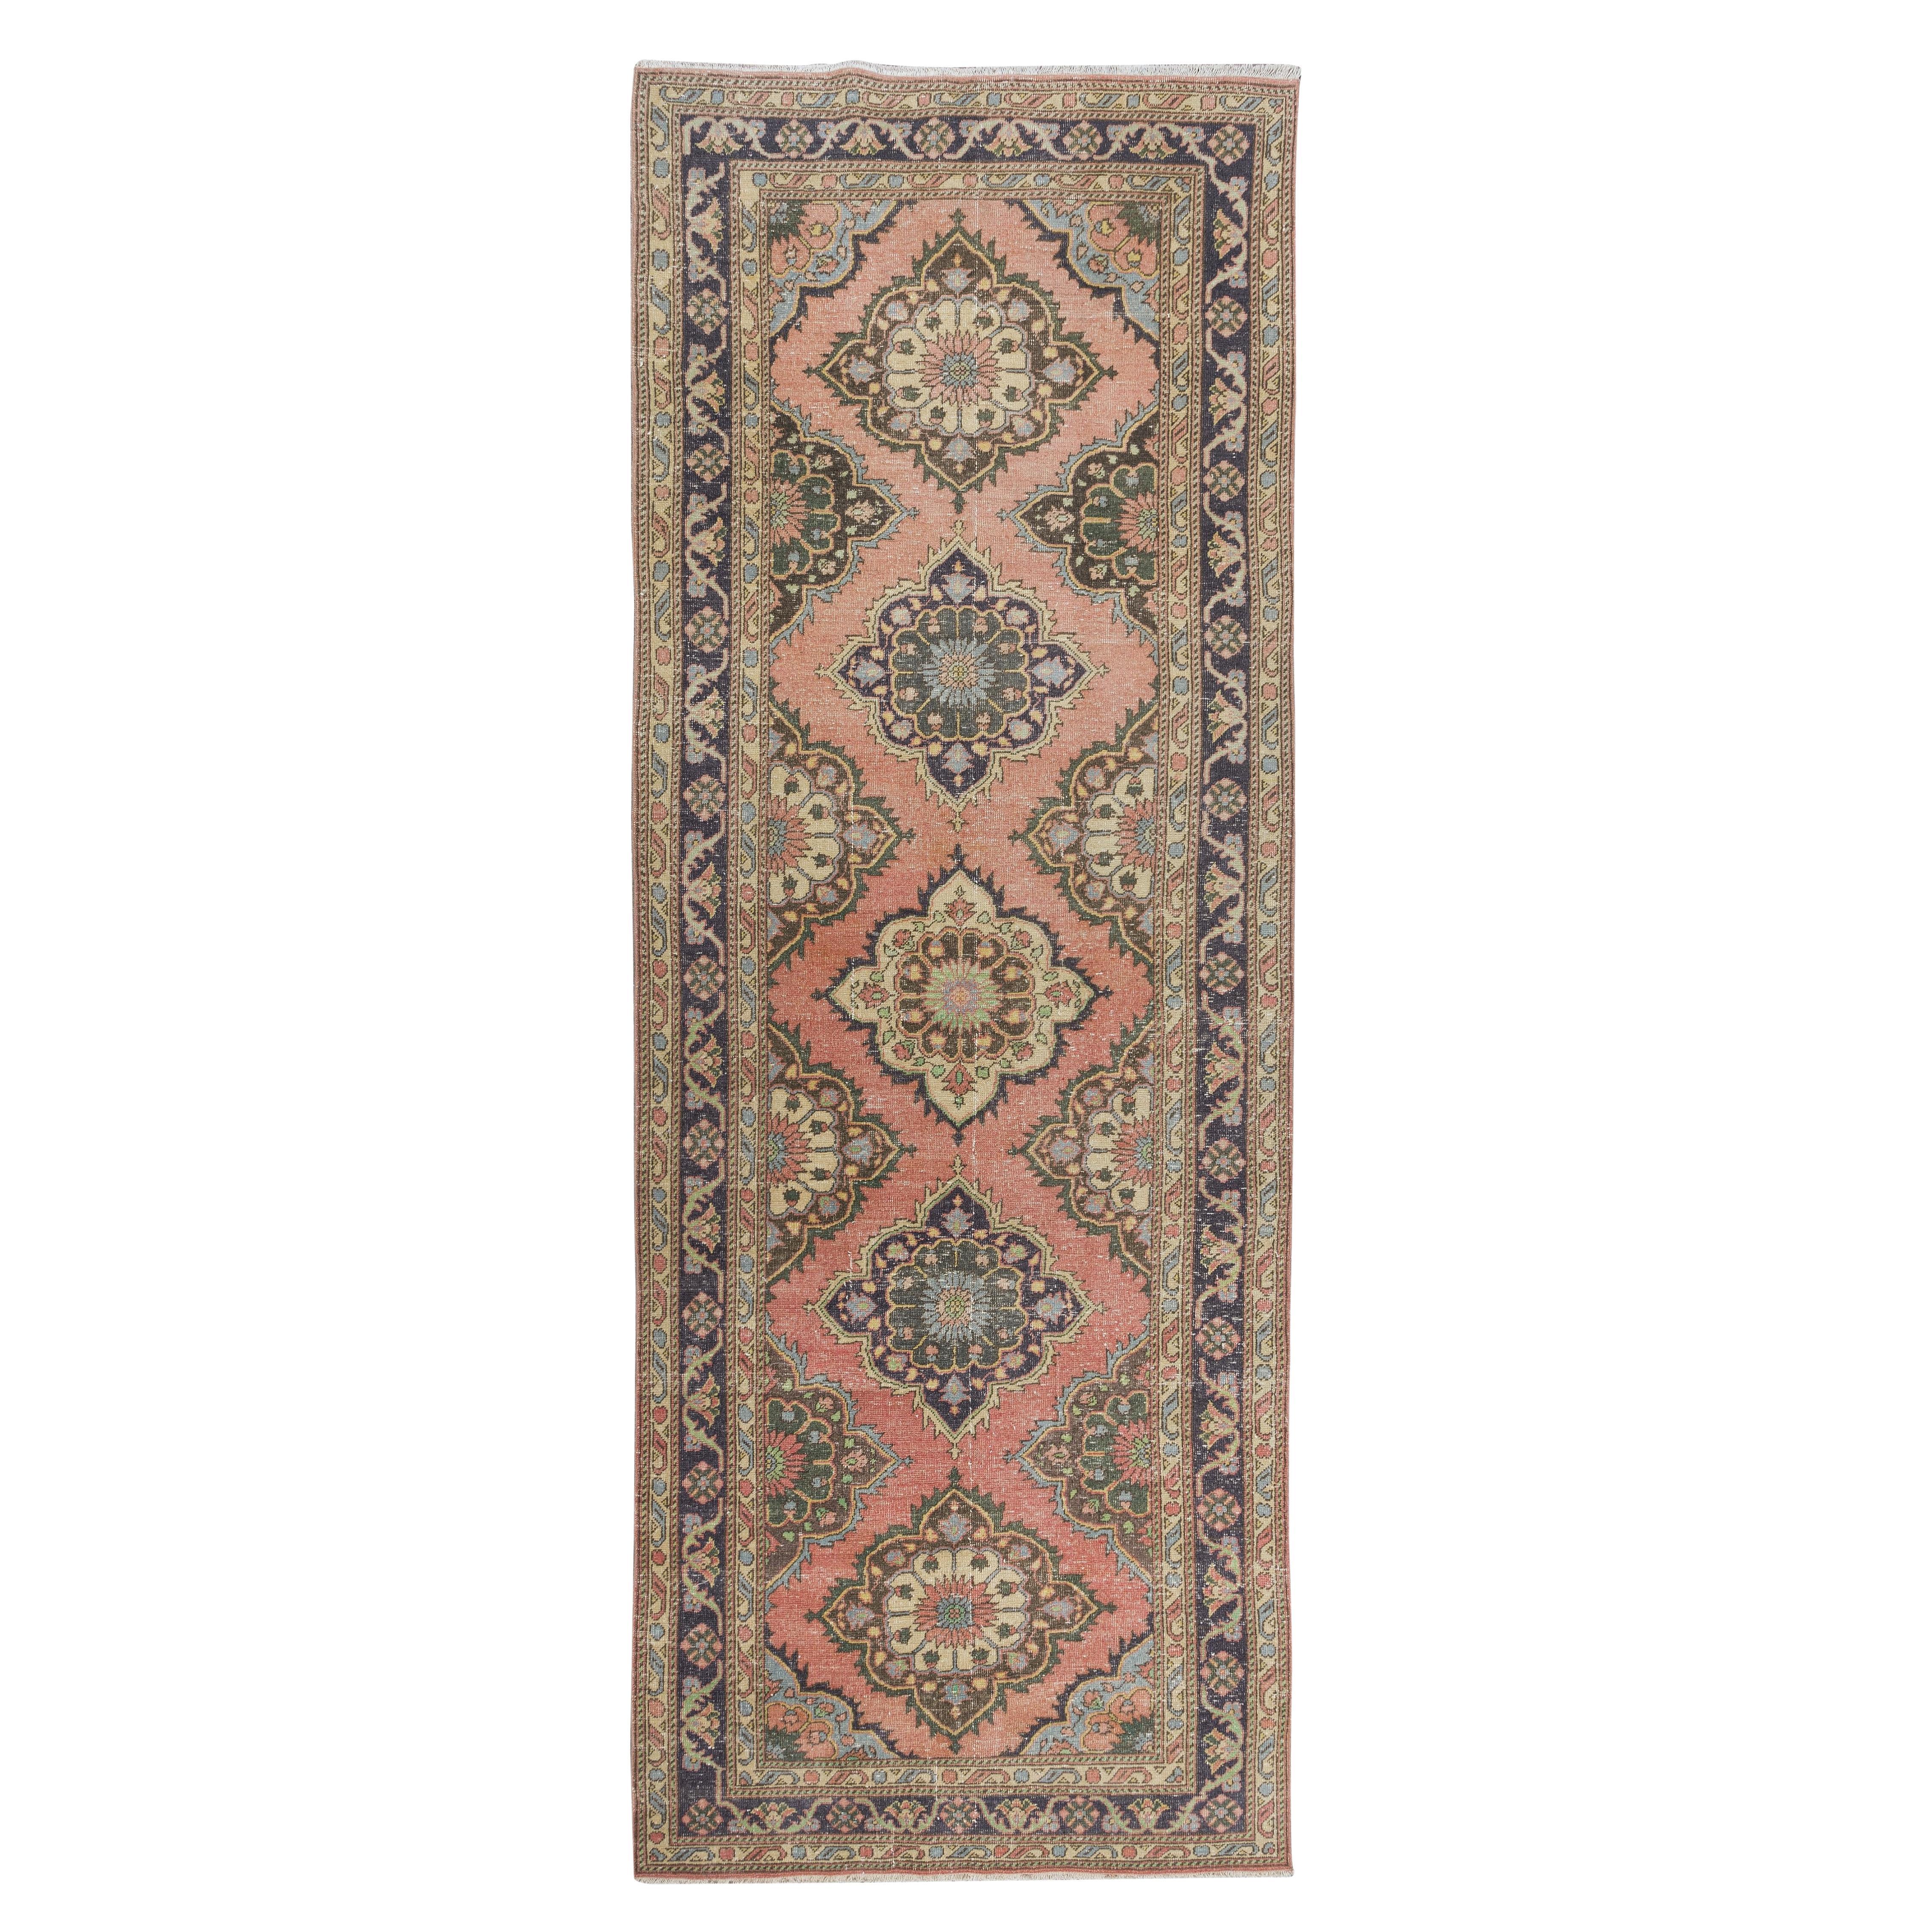 4.8x13 Ft Traditional Vintage Handmade Turkish Wool Runner Rug for Hallway For Sale